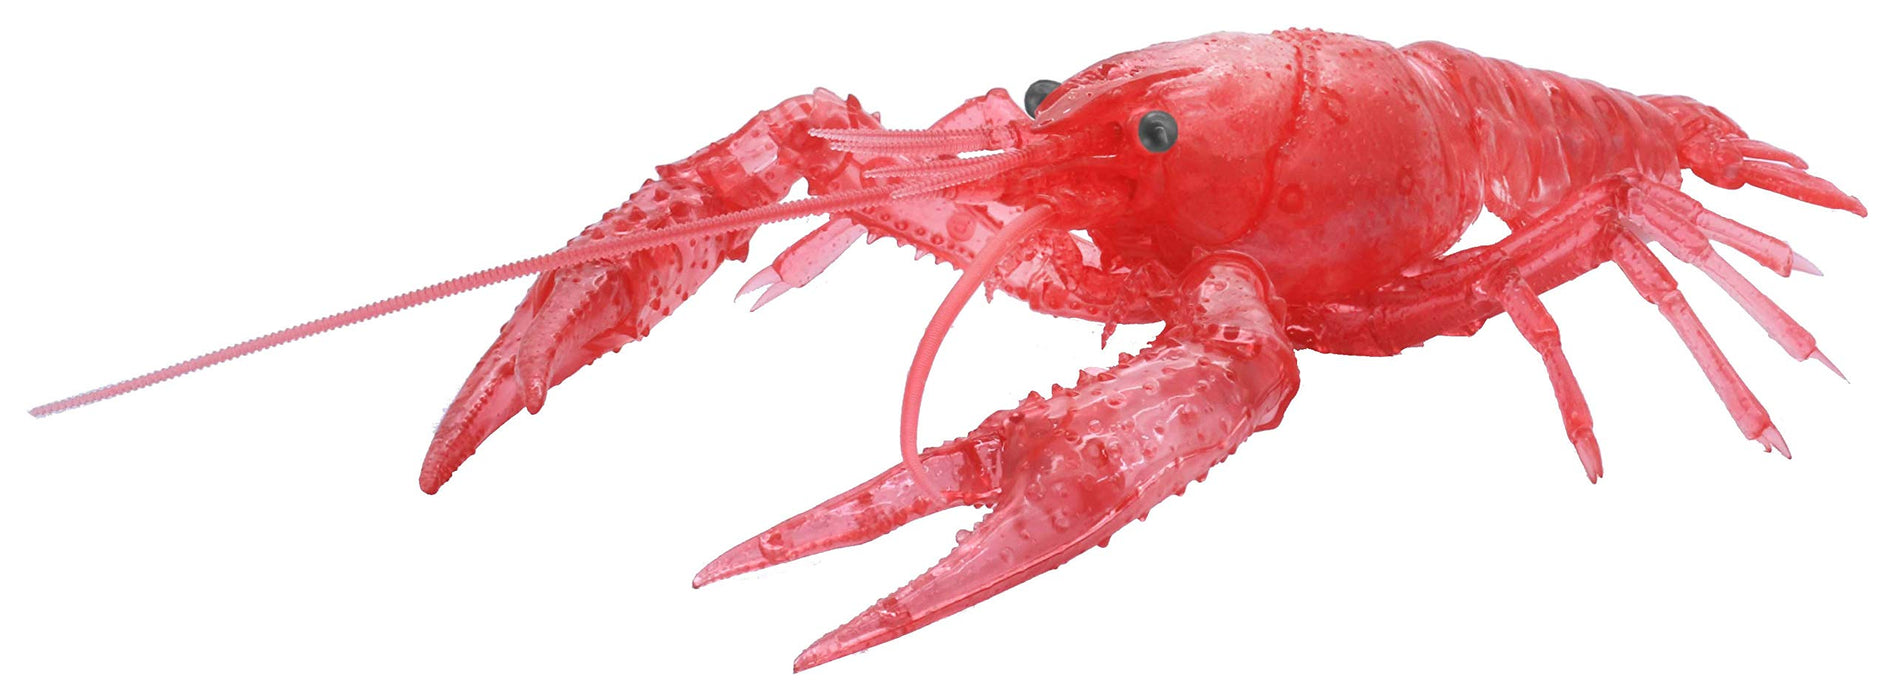 FUJIMI Research Series Procambarus Clarkii / Louisiana Crawfish Special Version Clear Red Plastic Model